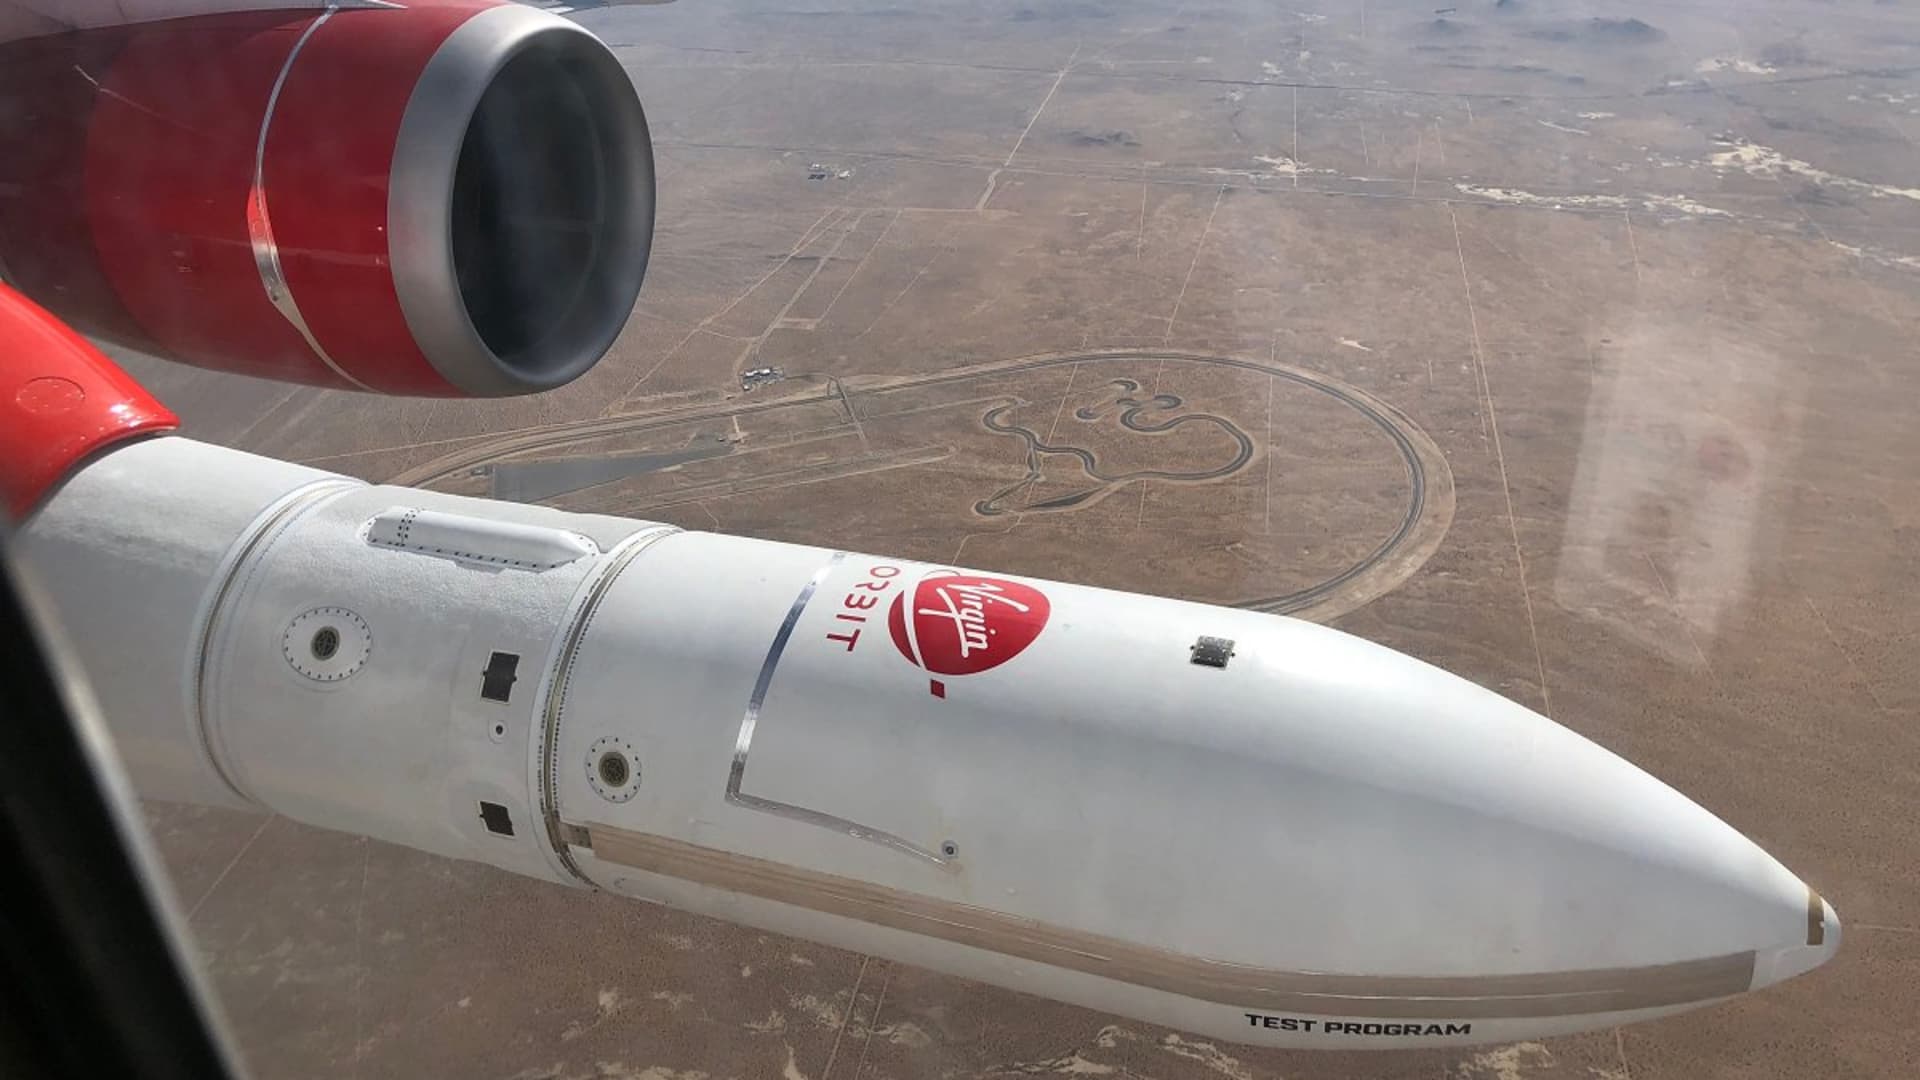 Virgin Orbit returning small team to prep for next rocket launch